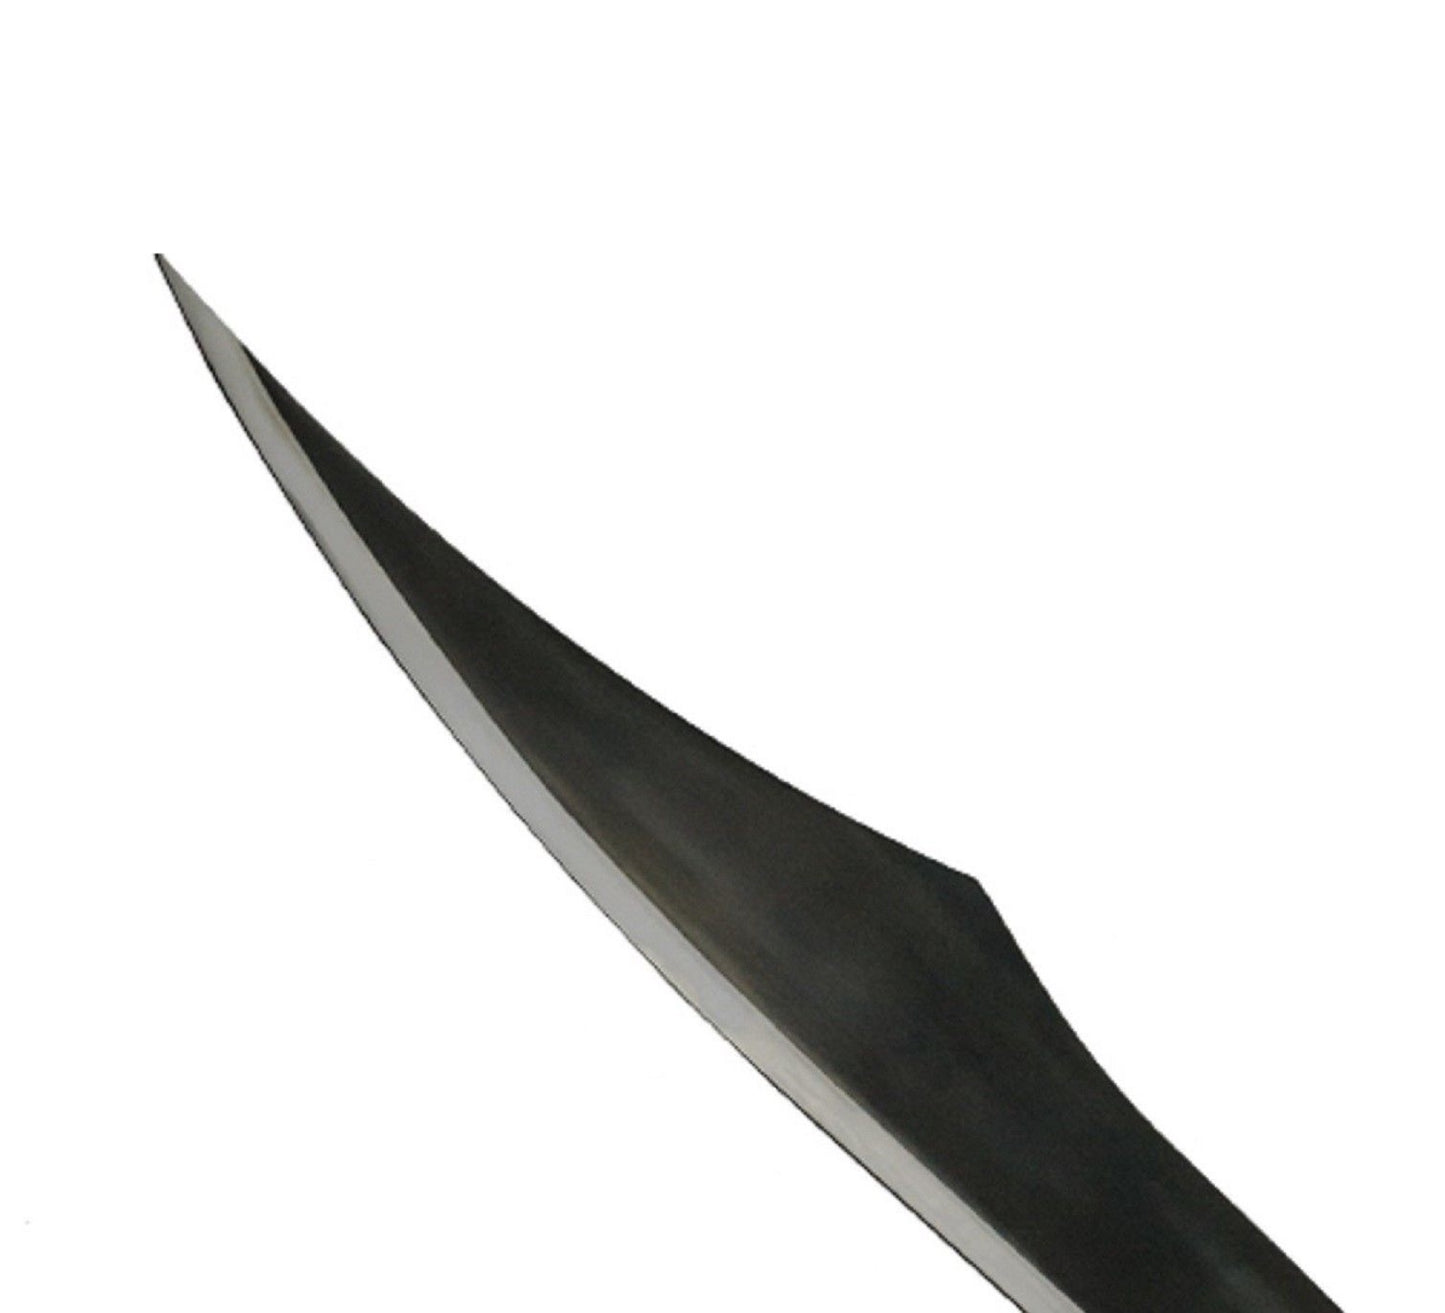 300 SPARTAN SWORD WITH LEATHER SHEATH